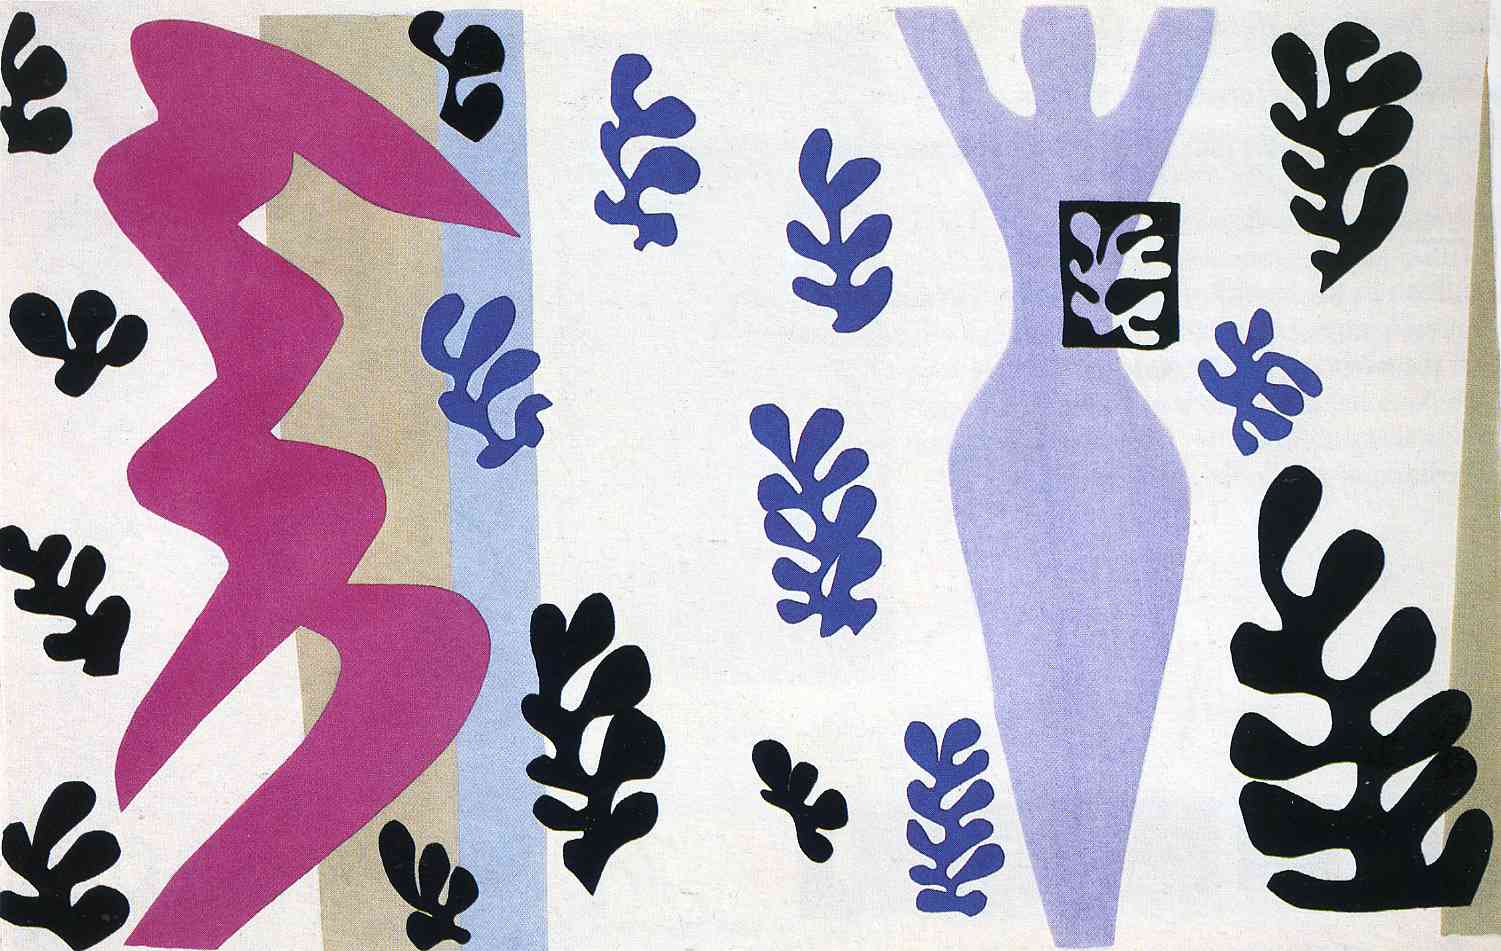 Henri Matisse - The Knife Thrower 1947